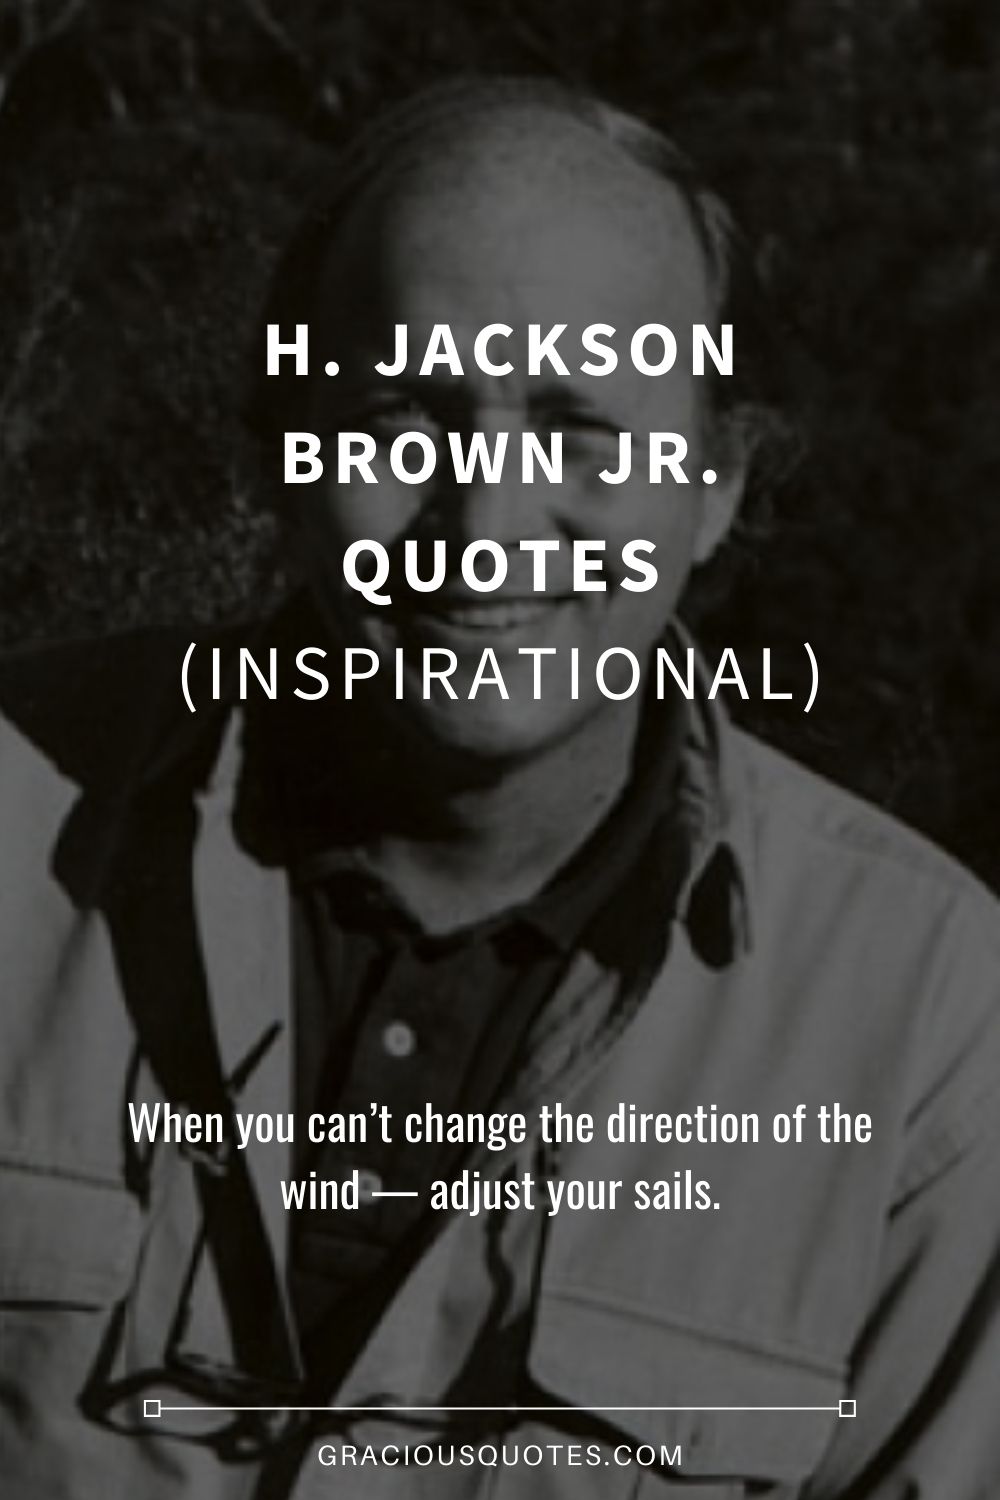 H. Jackson Brown Jr. Quotes (INSPIRATIONAL) - Gracious Quotes